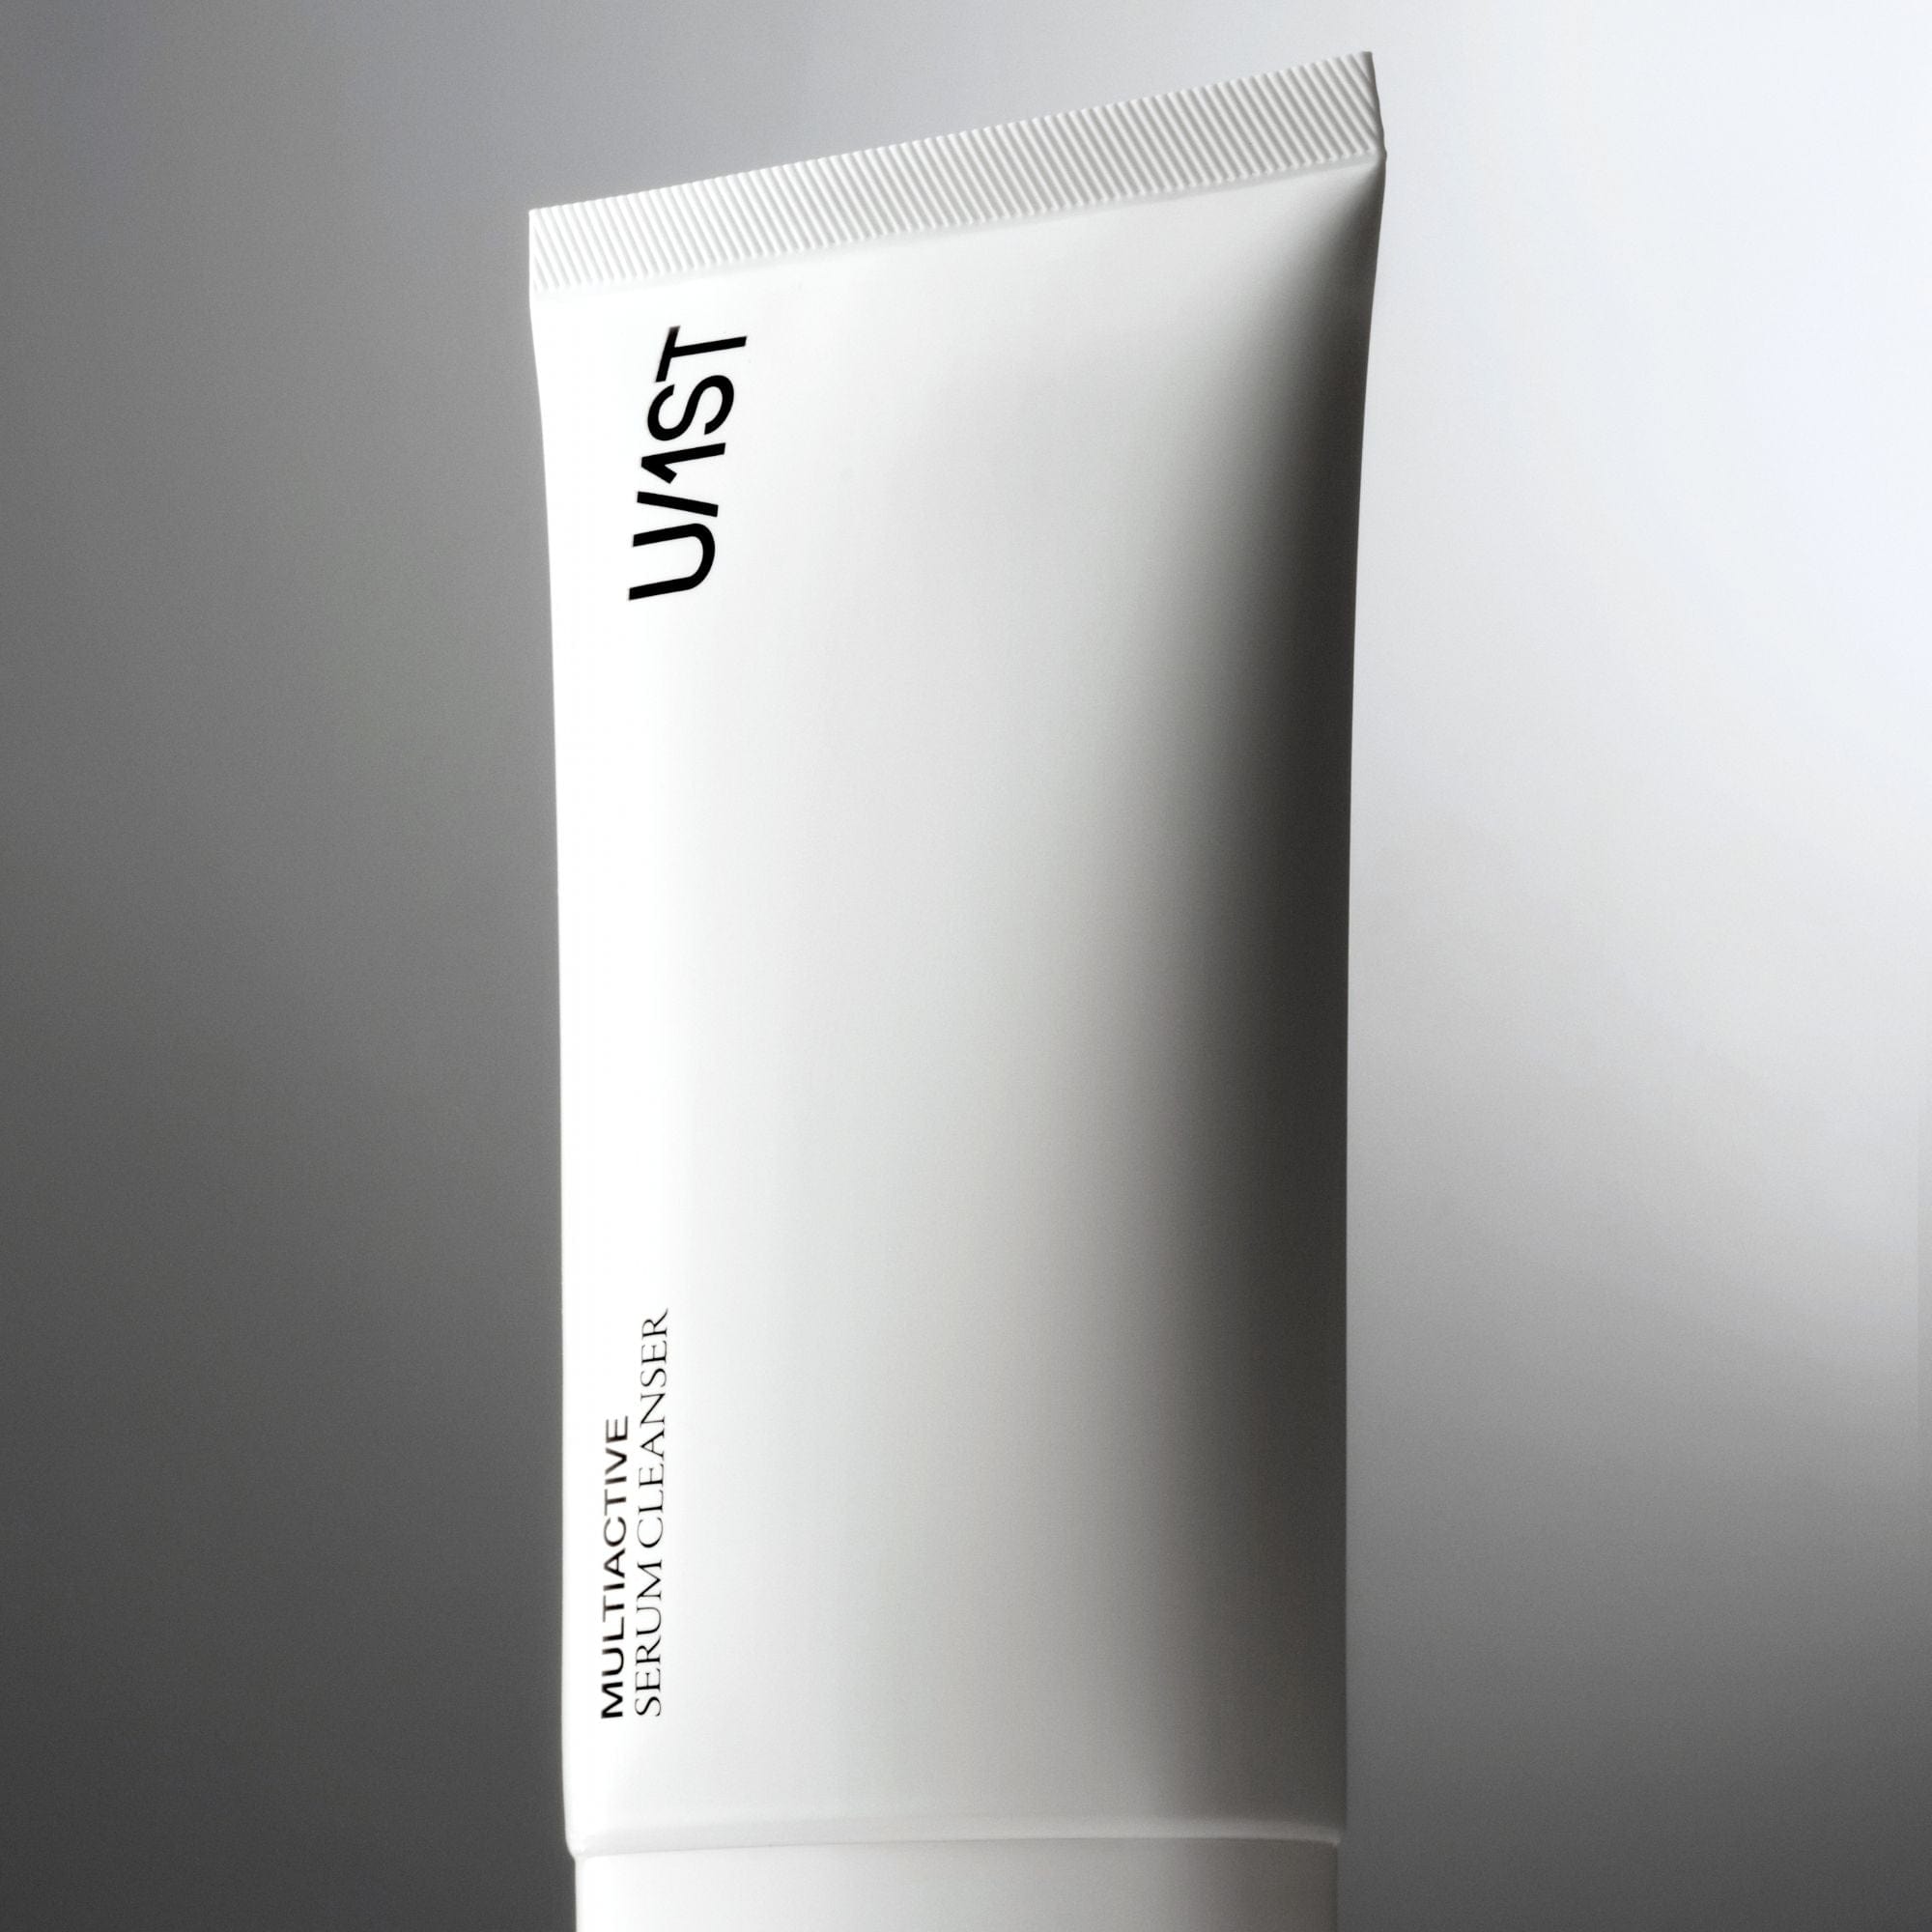 Multiactive Serum Cleanser U/1ST Produto de limpeza facial